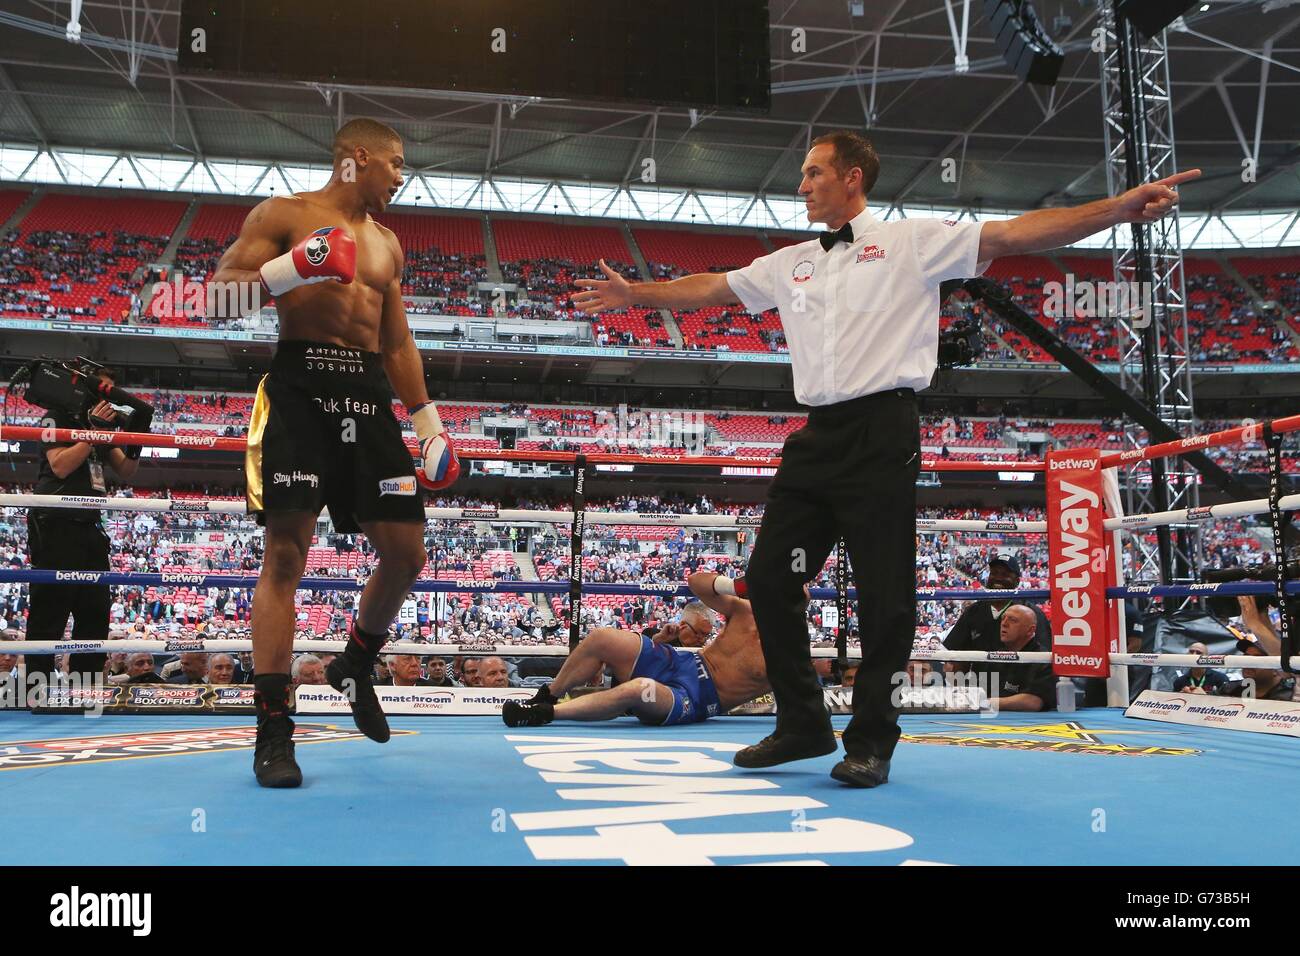 Boxing - Undercard - Wembley Arena Stock Photo - Alamy